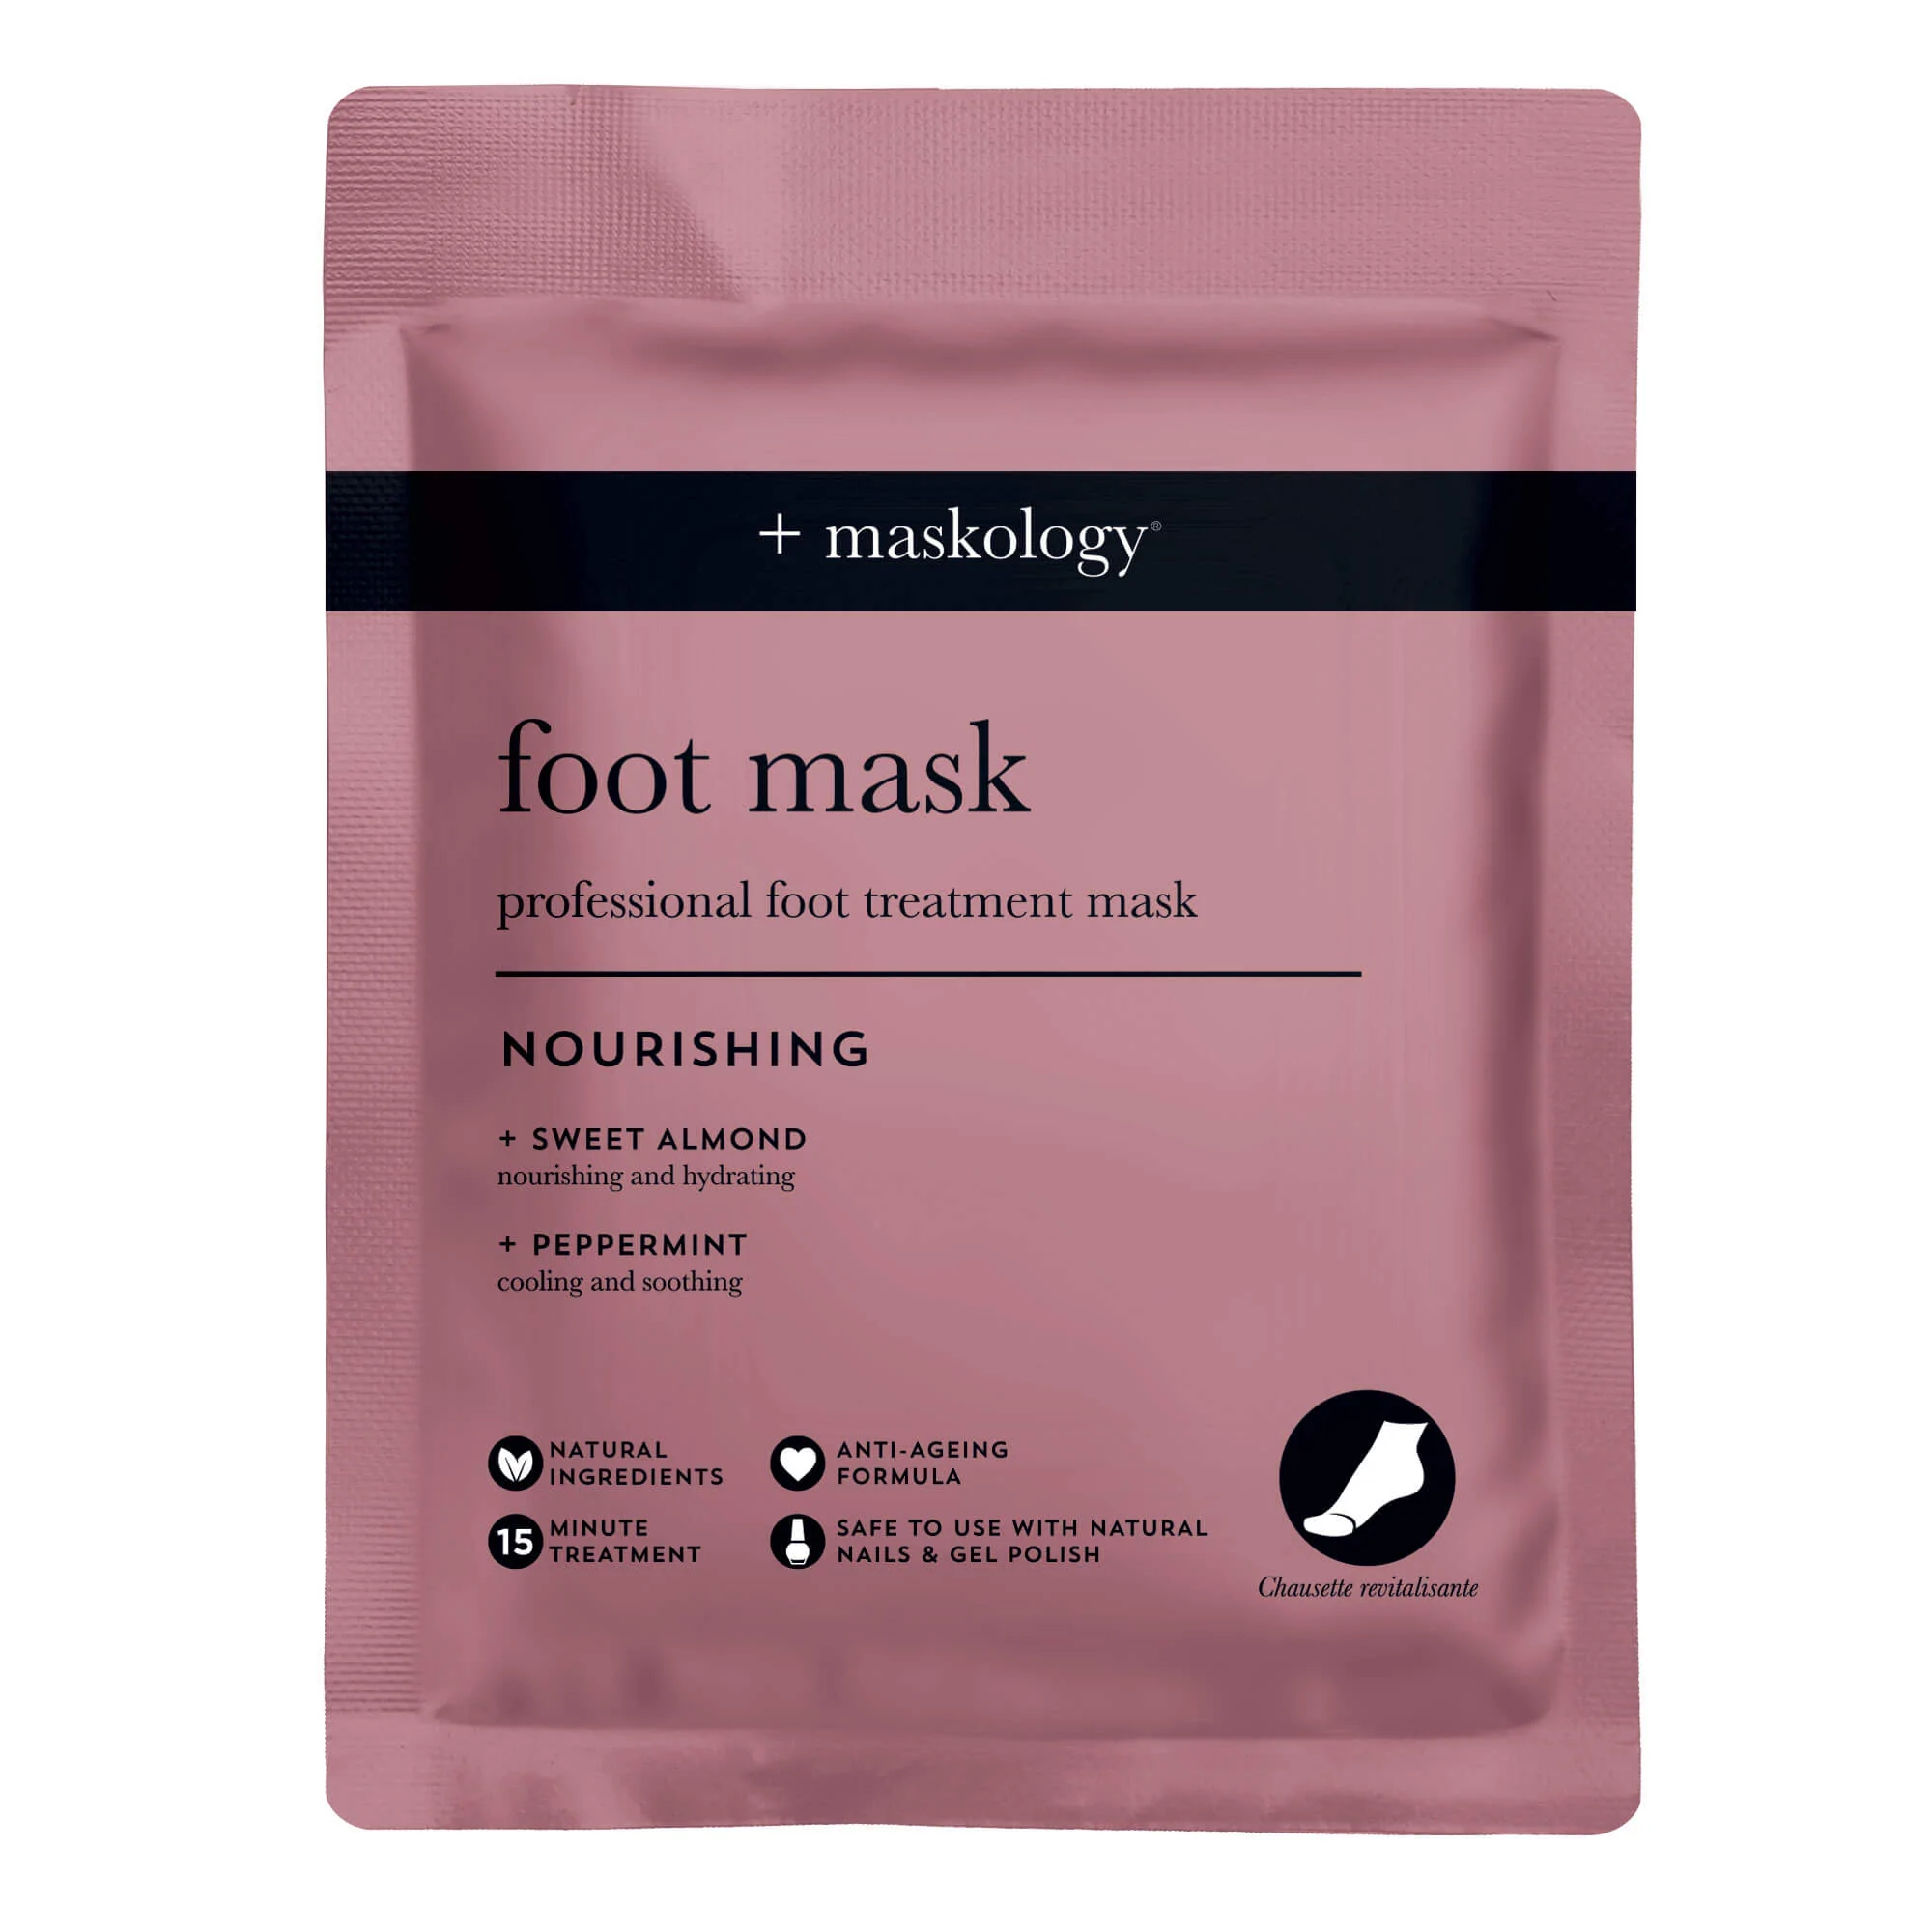 Maskology Foot Mask – Professional Foot Treatment Mask